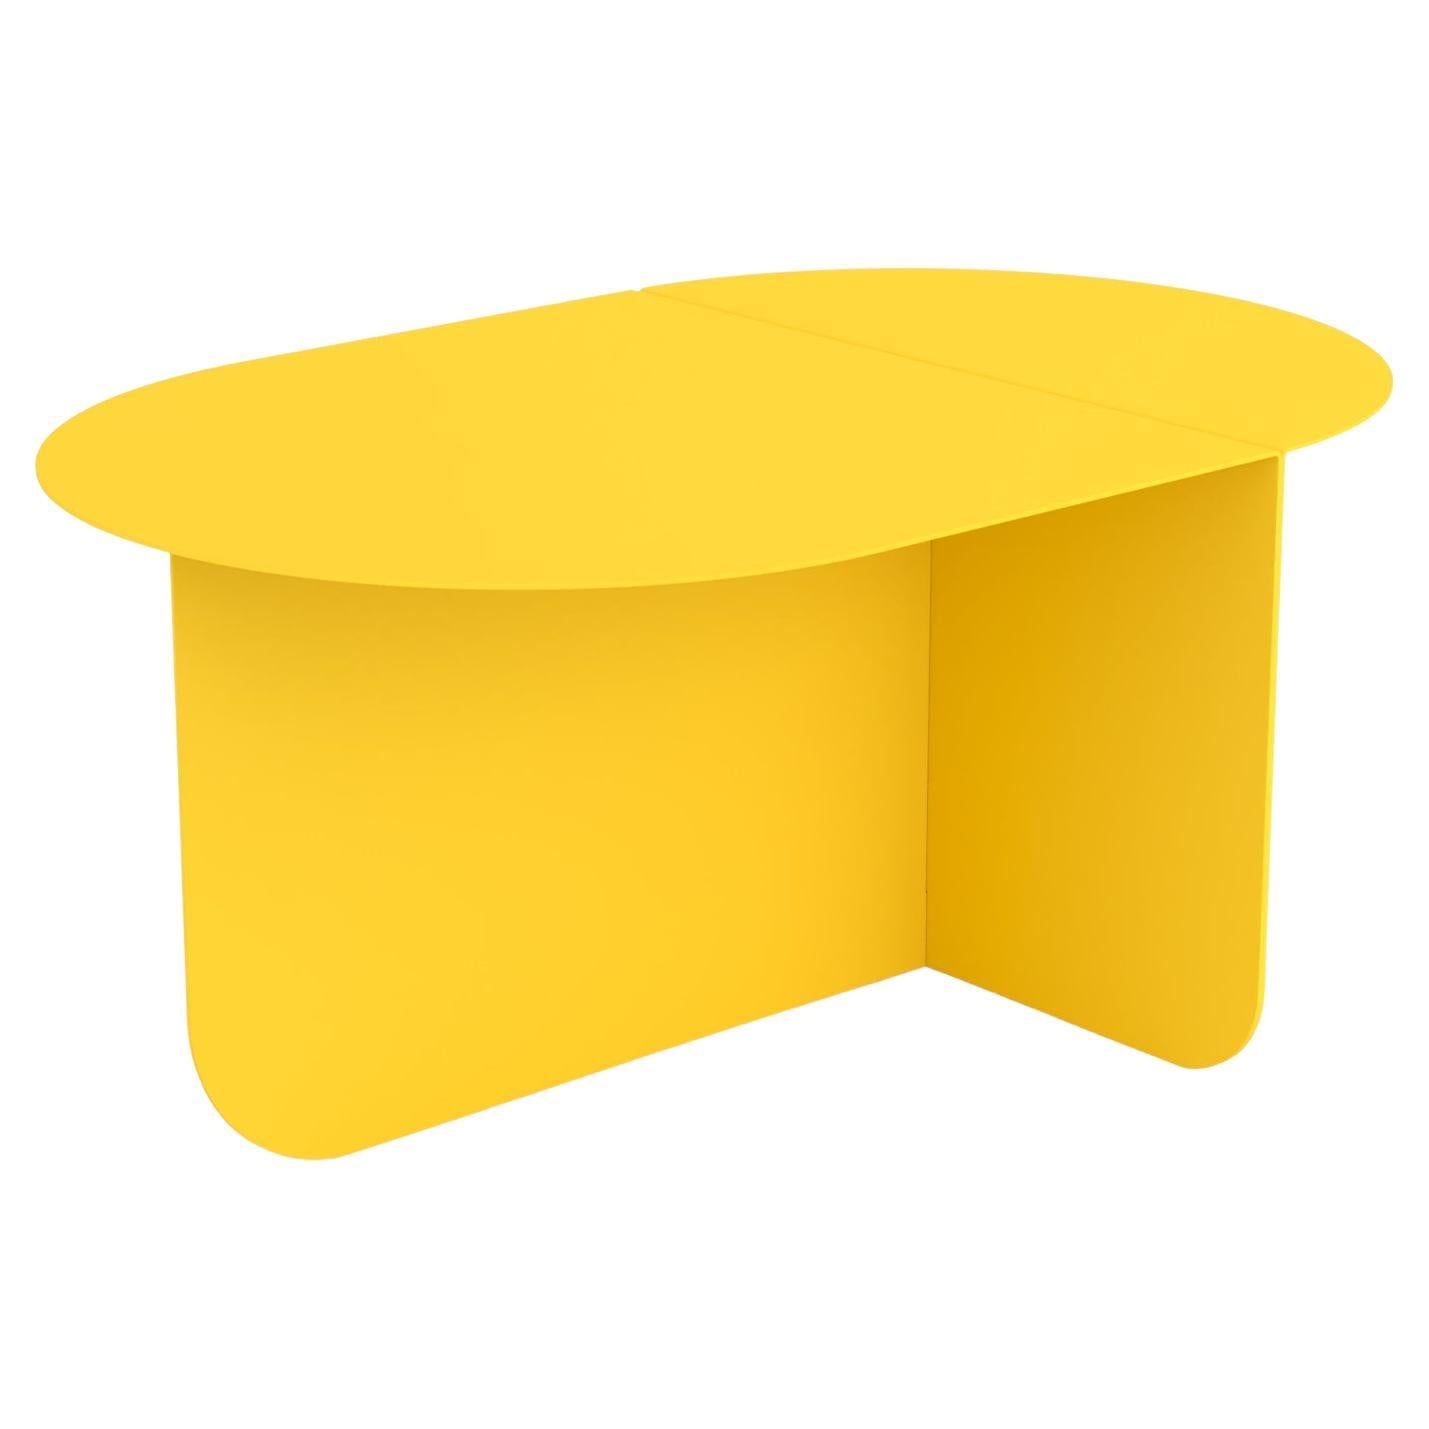 Colour, a Modern Oval Coffee Table, Ral 1018 - Zinc Yellow, by Bas Vellekoop